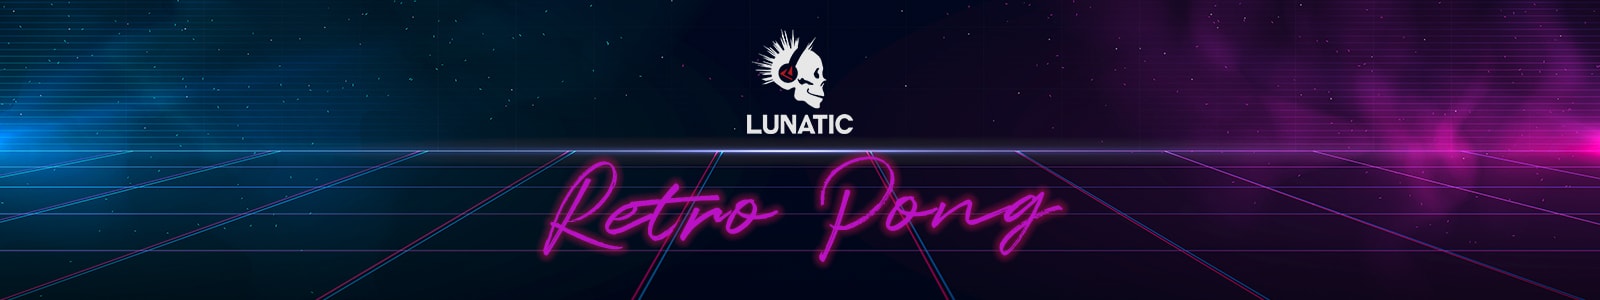 Retro Pong by Lunatic Audio